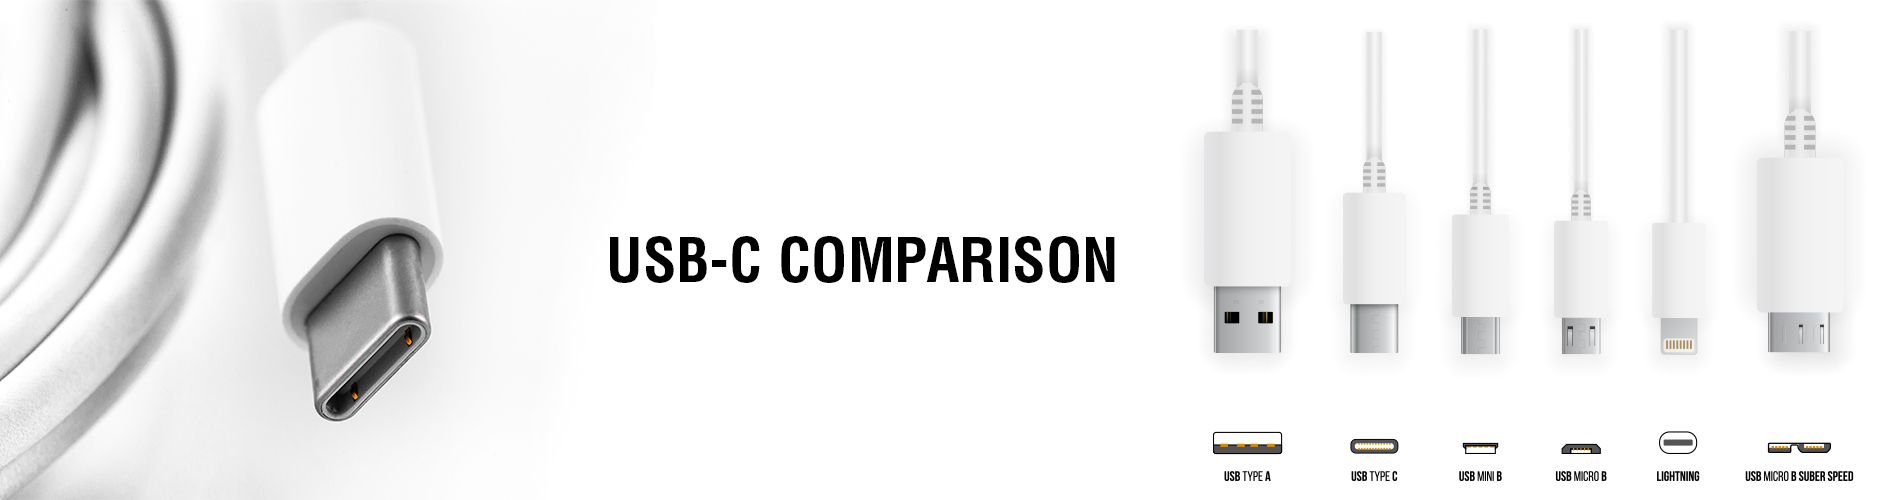 USB-C Comparison